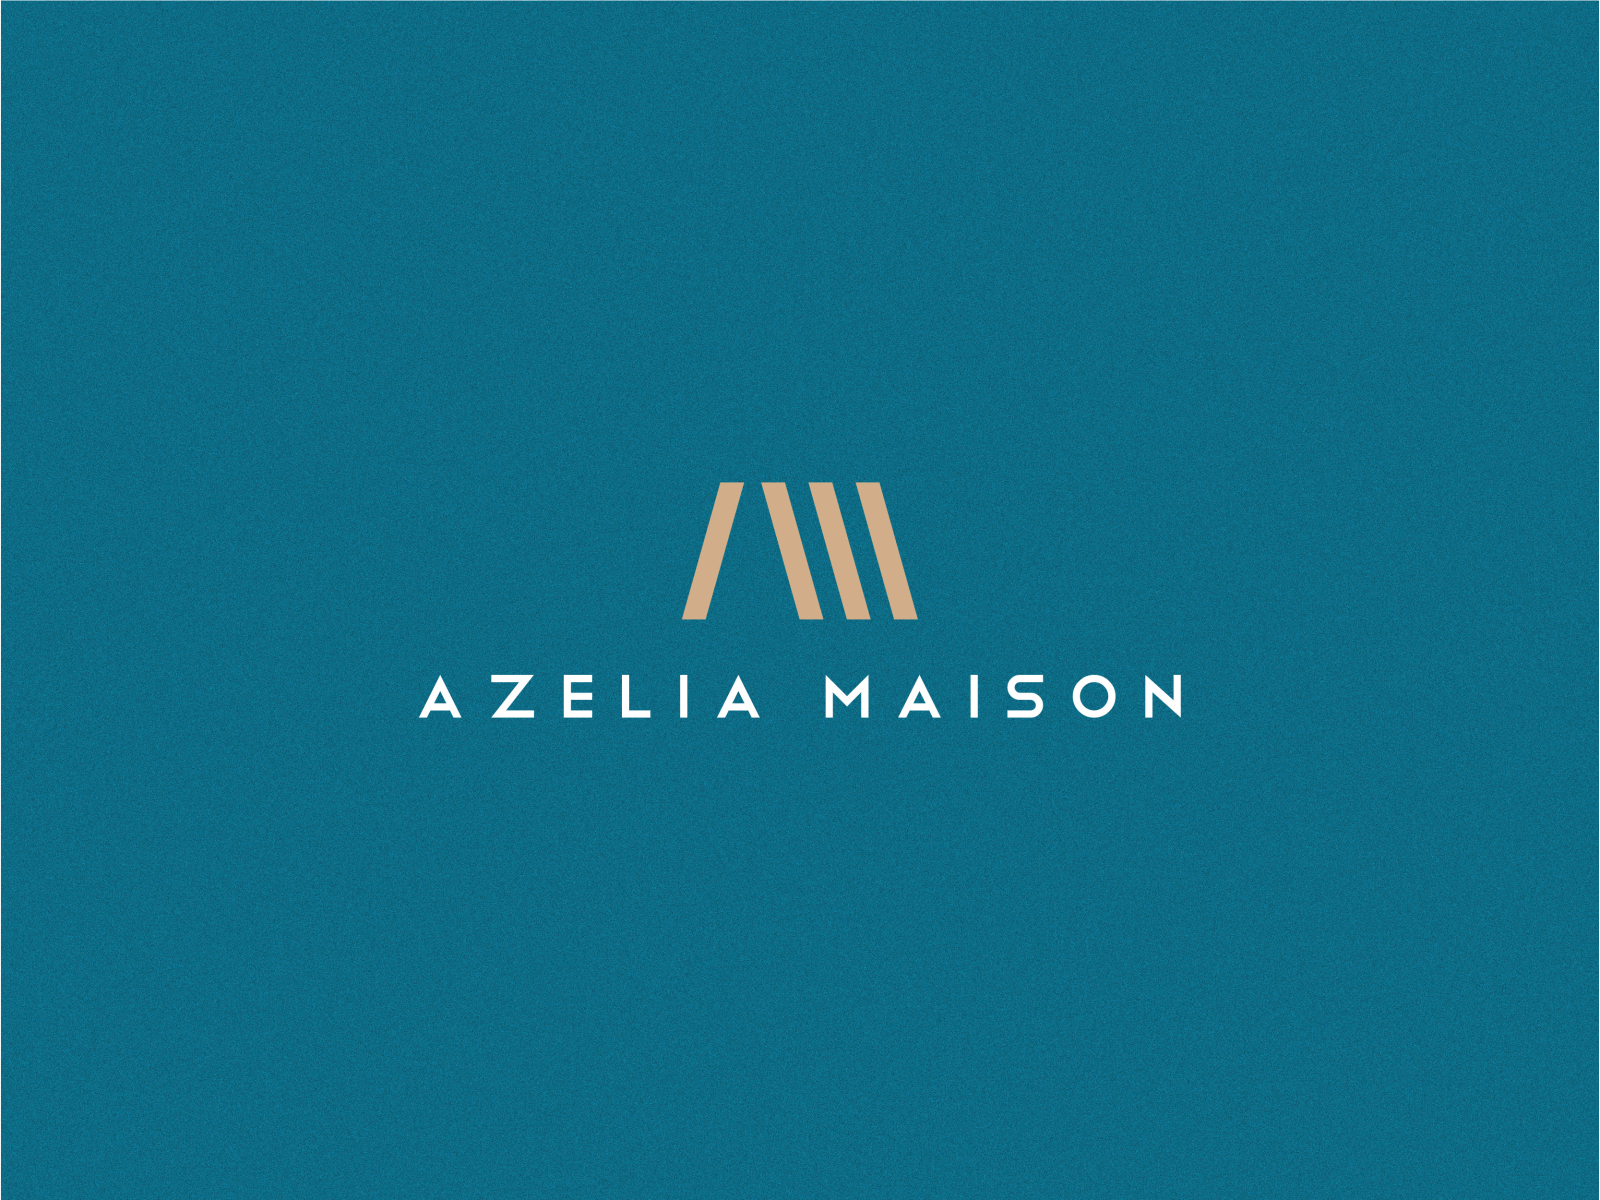 Azelia Maison - Logo by Hammed Okunade on Dribbble